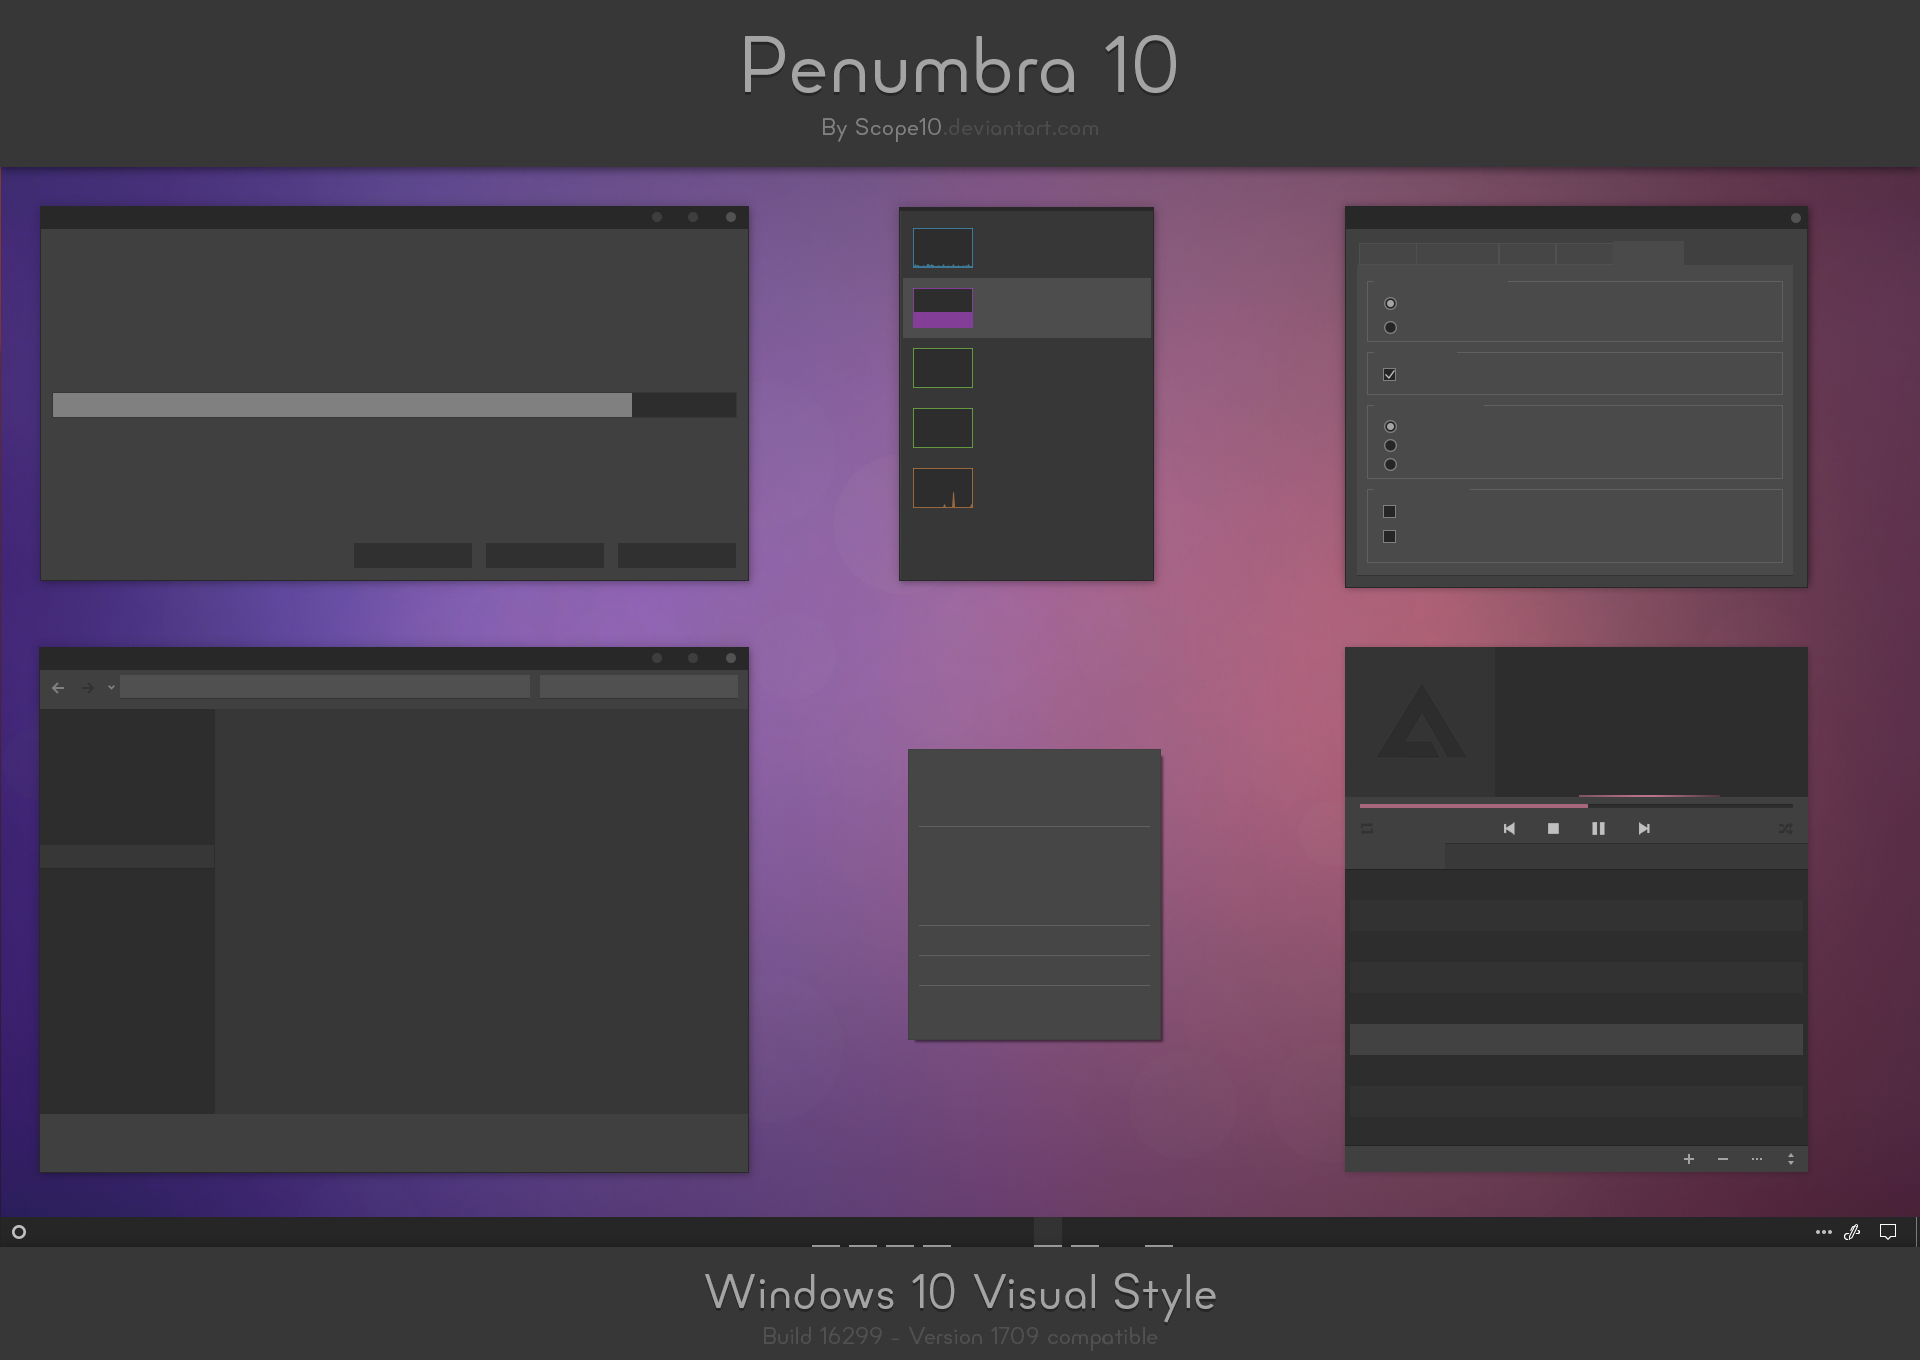 Penumbra 10 theme windows 10